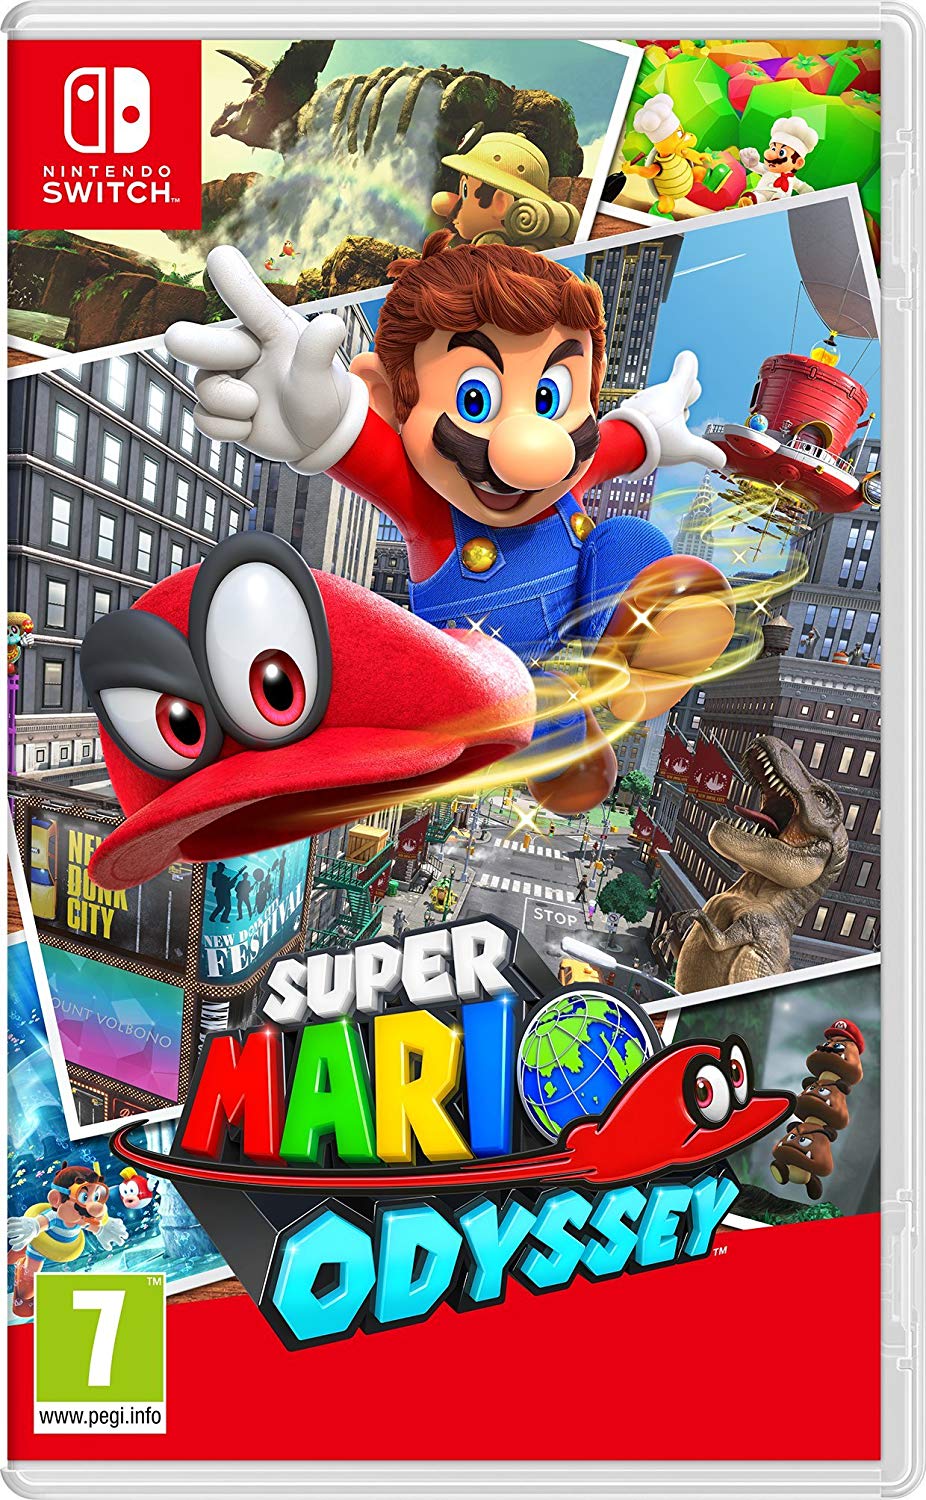 Super Mario Odyssey Digital Download Key (Nintendo Switch): USA